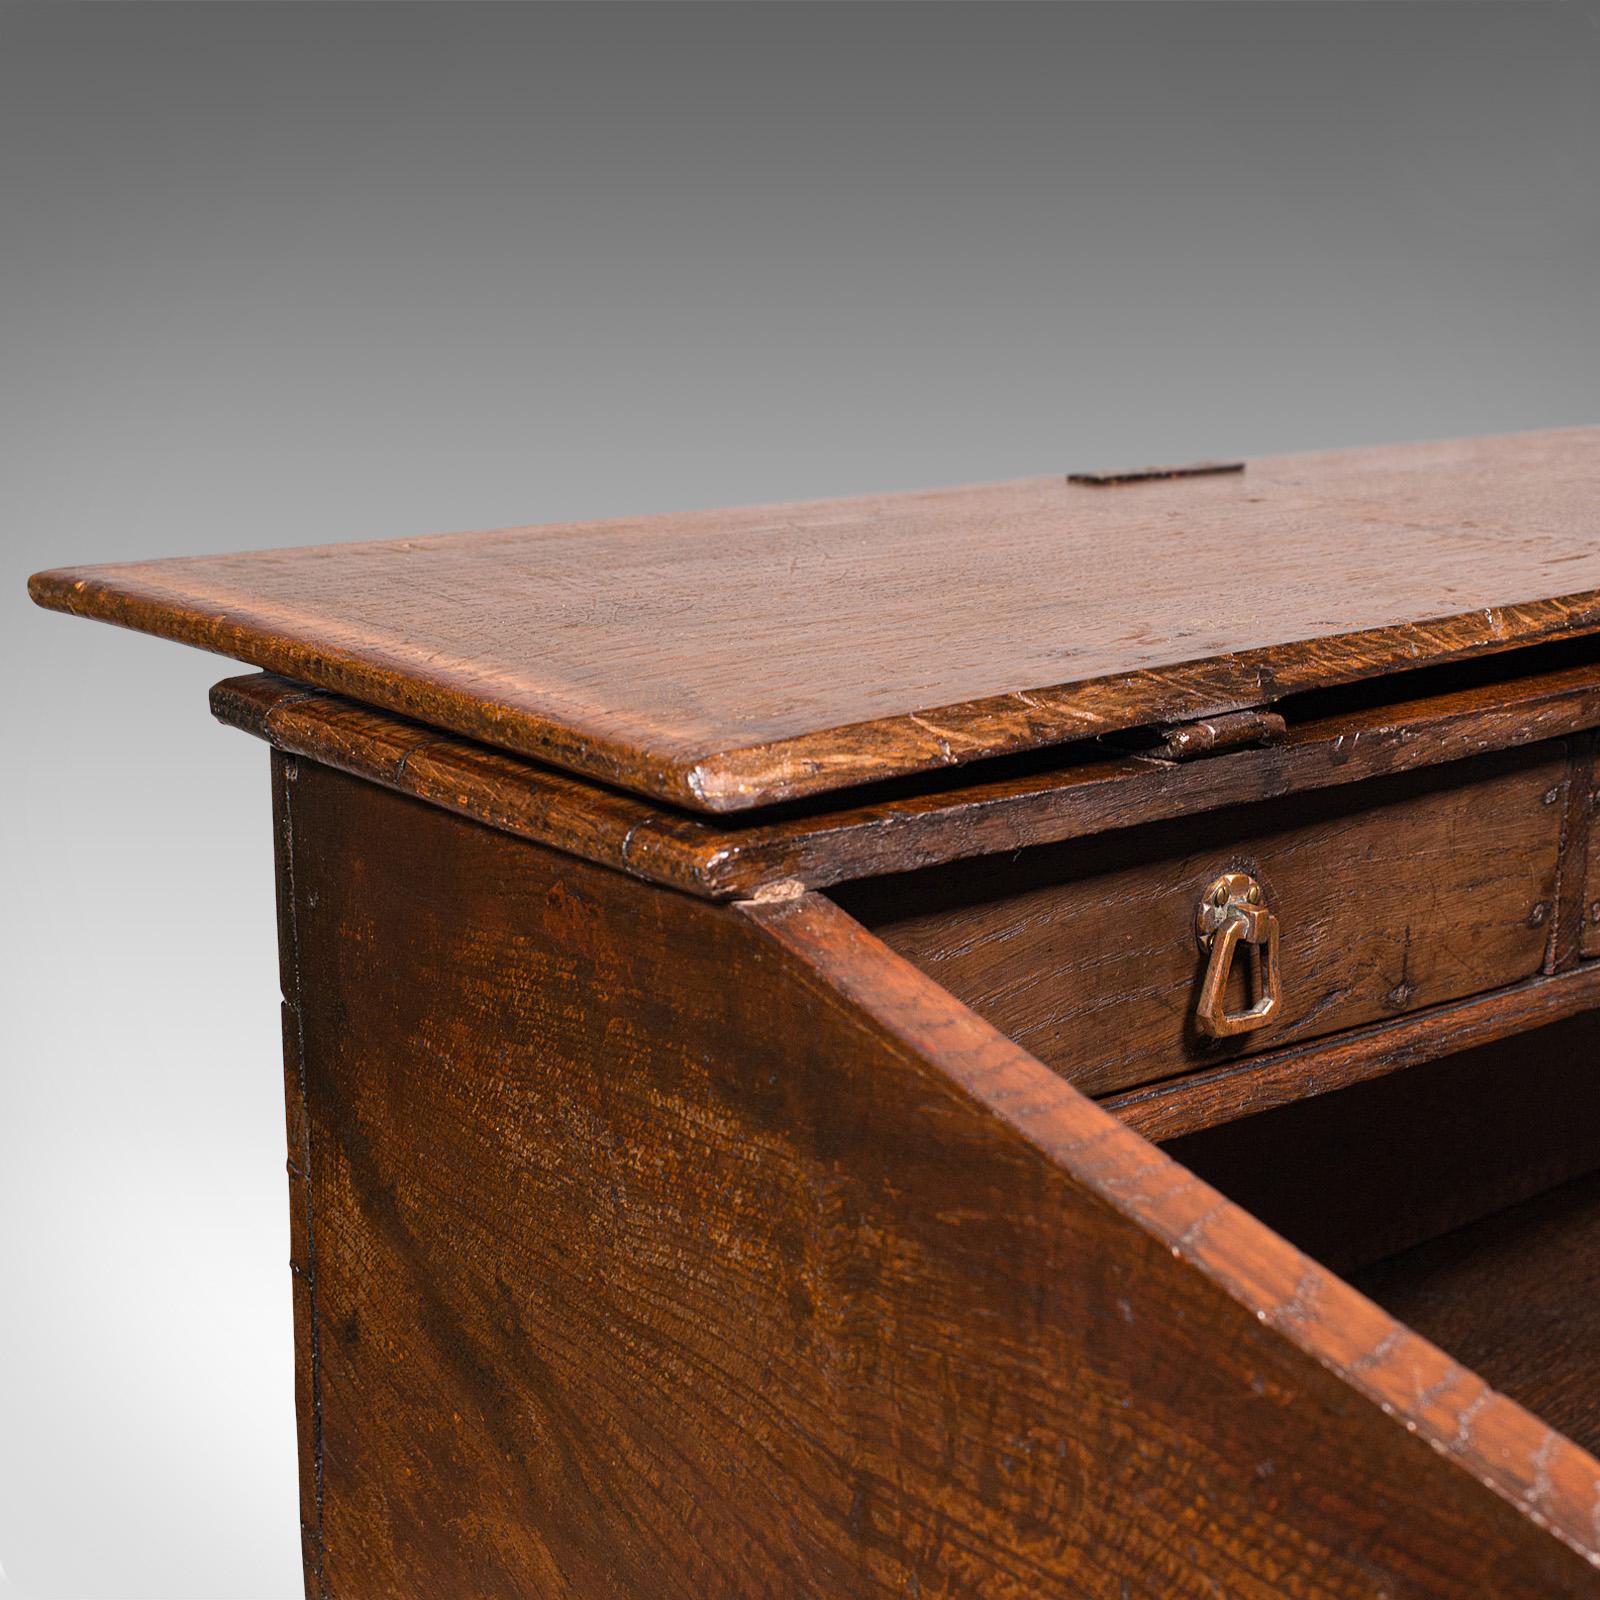 Antique Verger's Table Top Desk, English, Oak, Ecclesiastical, William III, 1700 For Sale 5